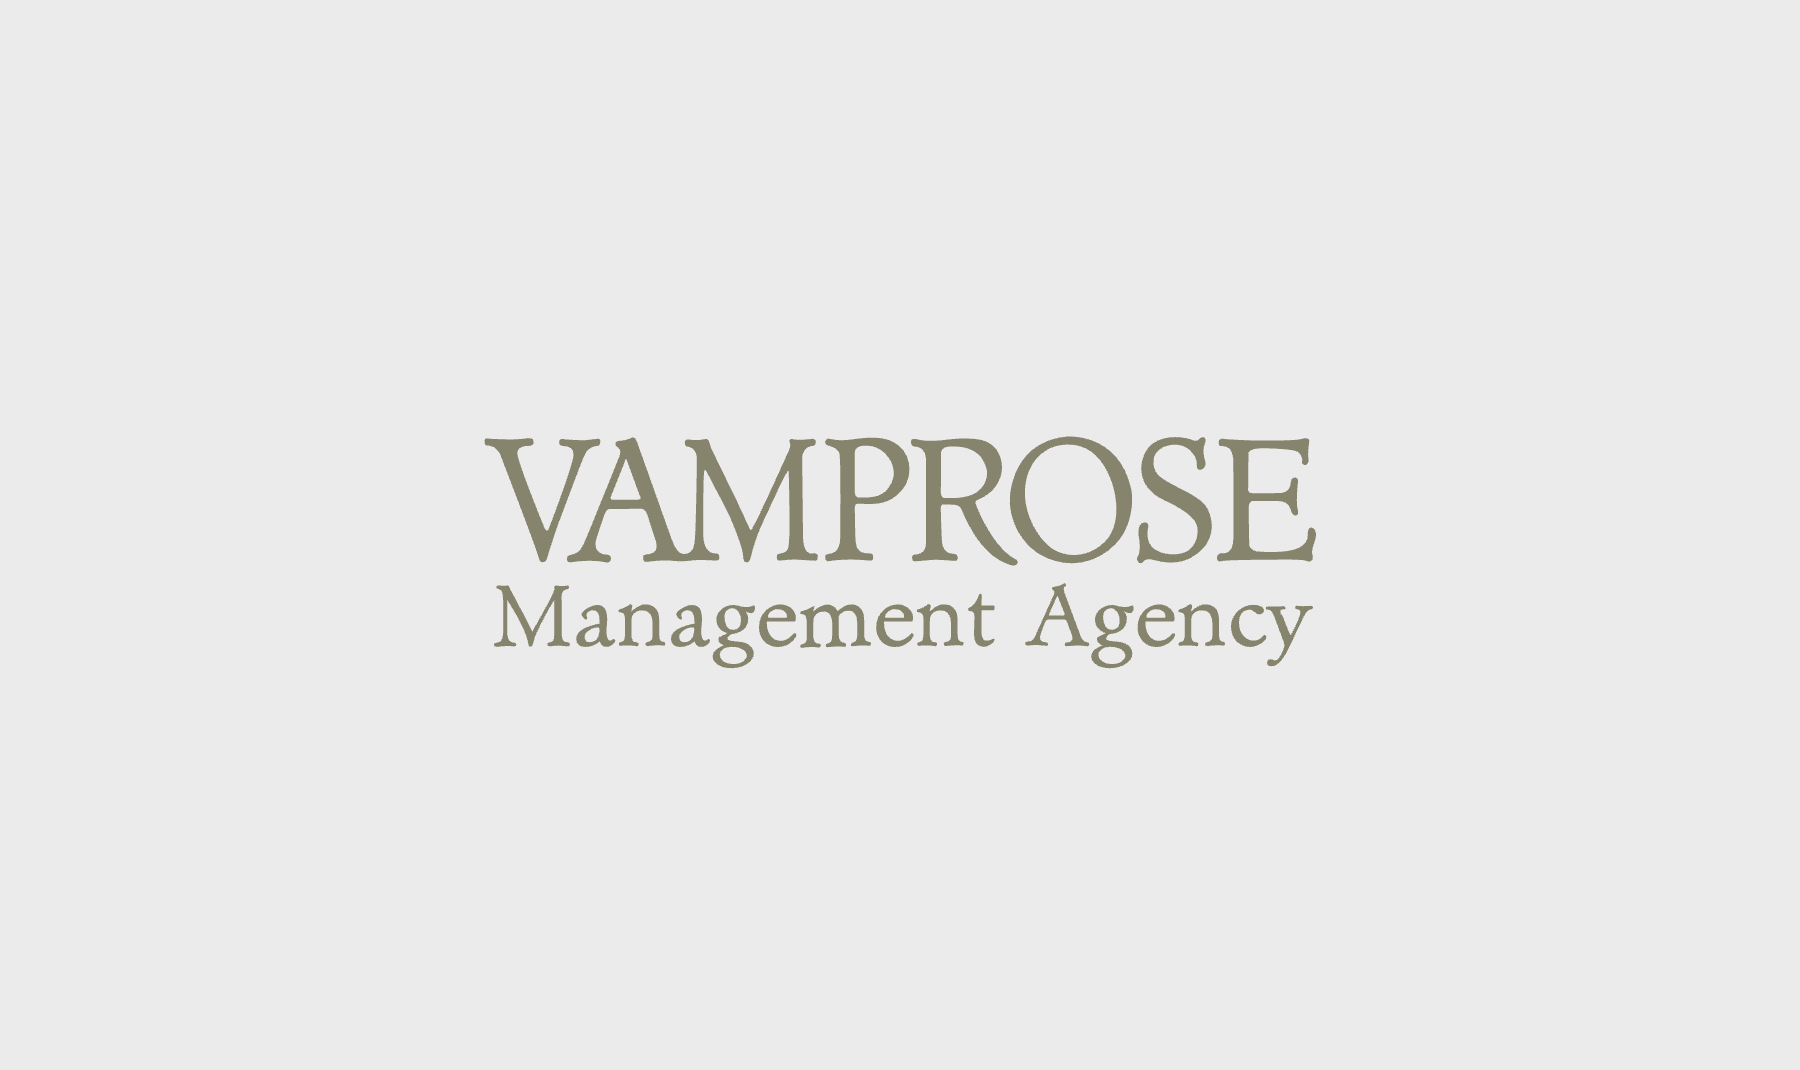 VAMPROSE Management Agency